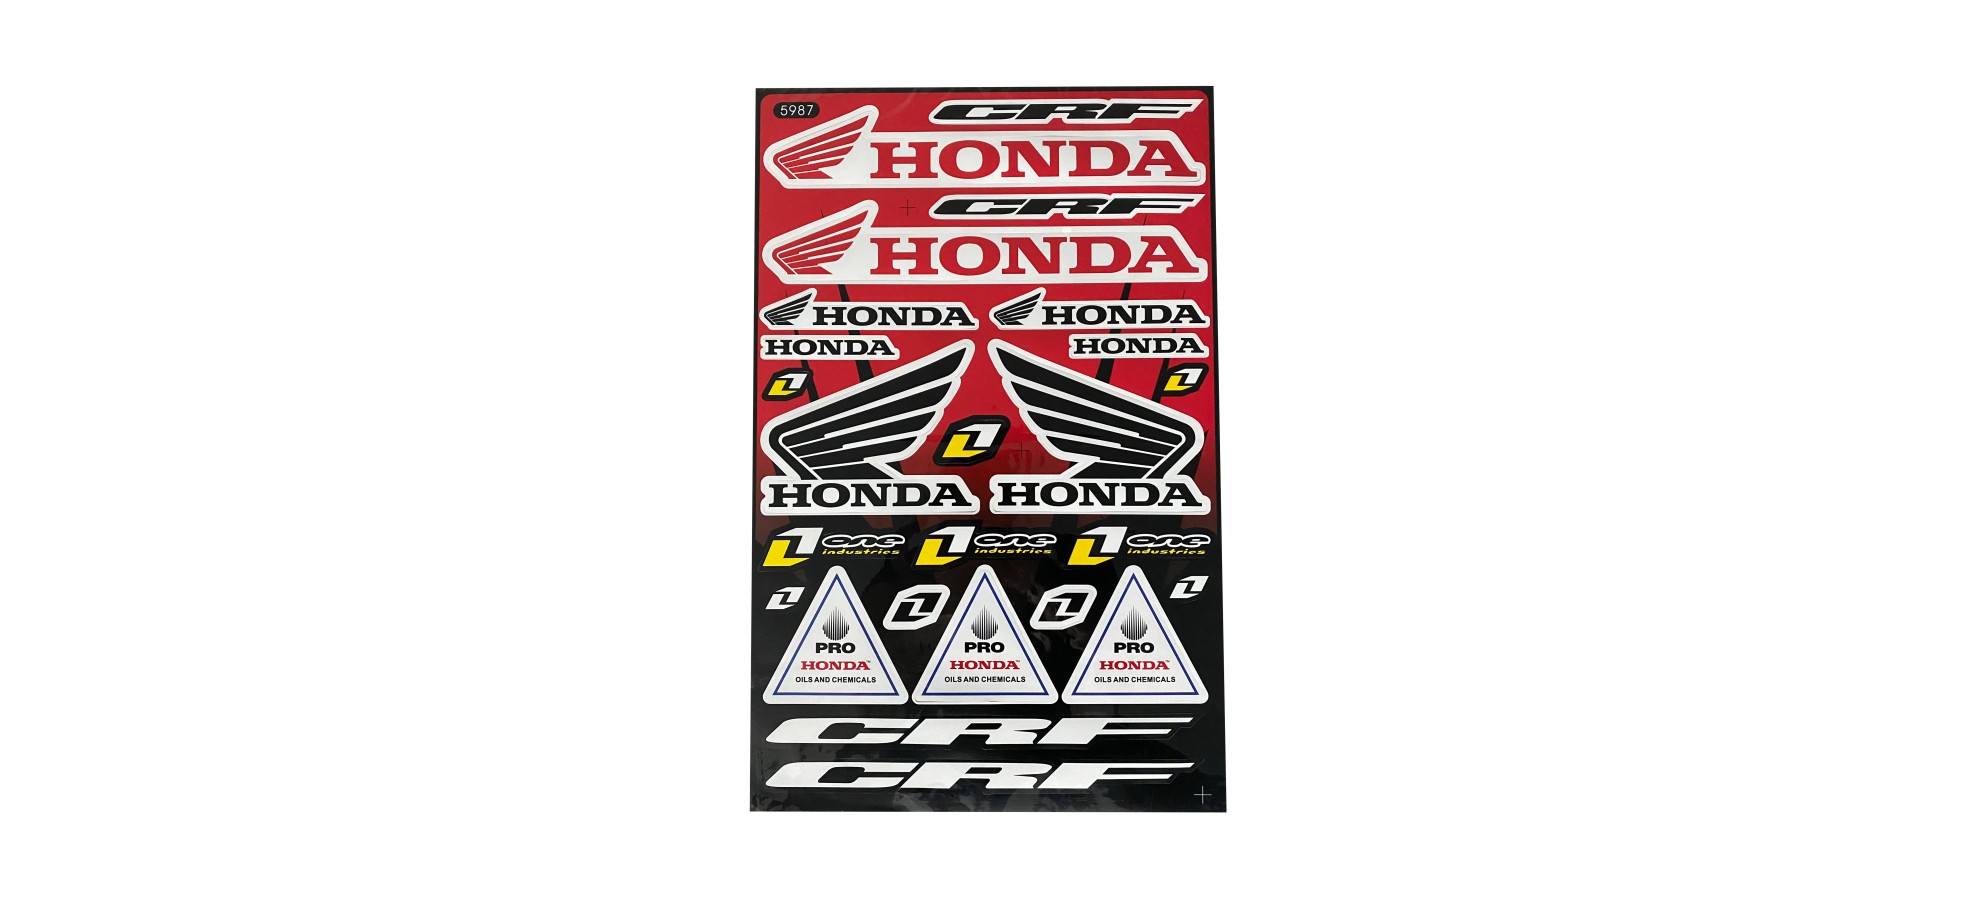 Planche de Stickers Honda